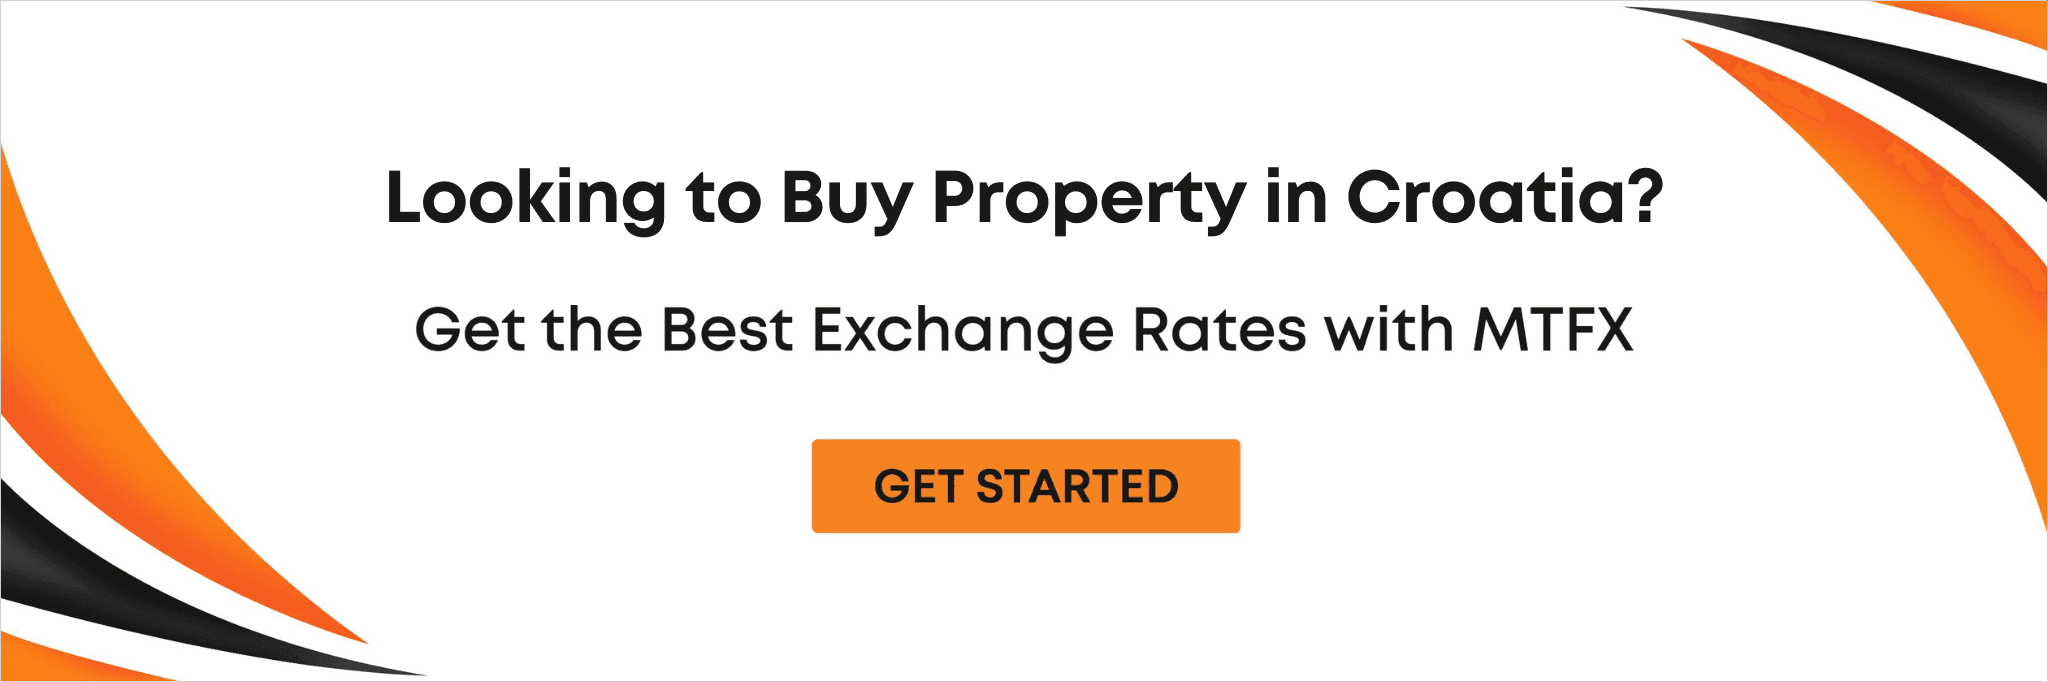 Looking to Buy Property In Croatia?